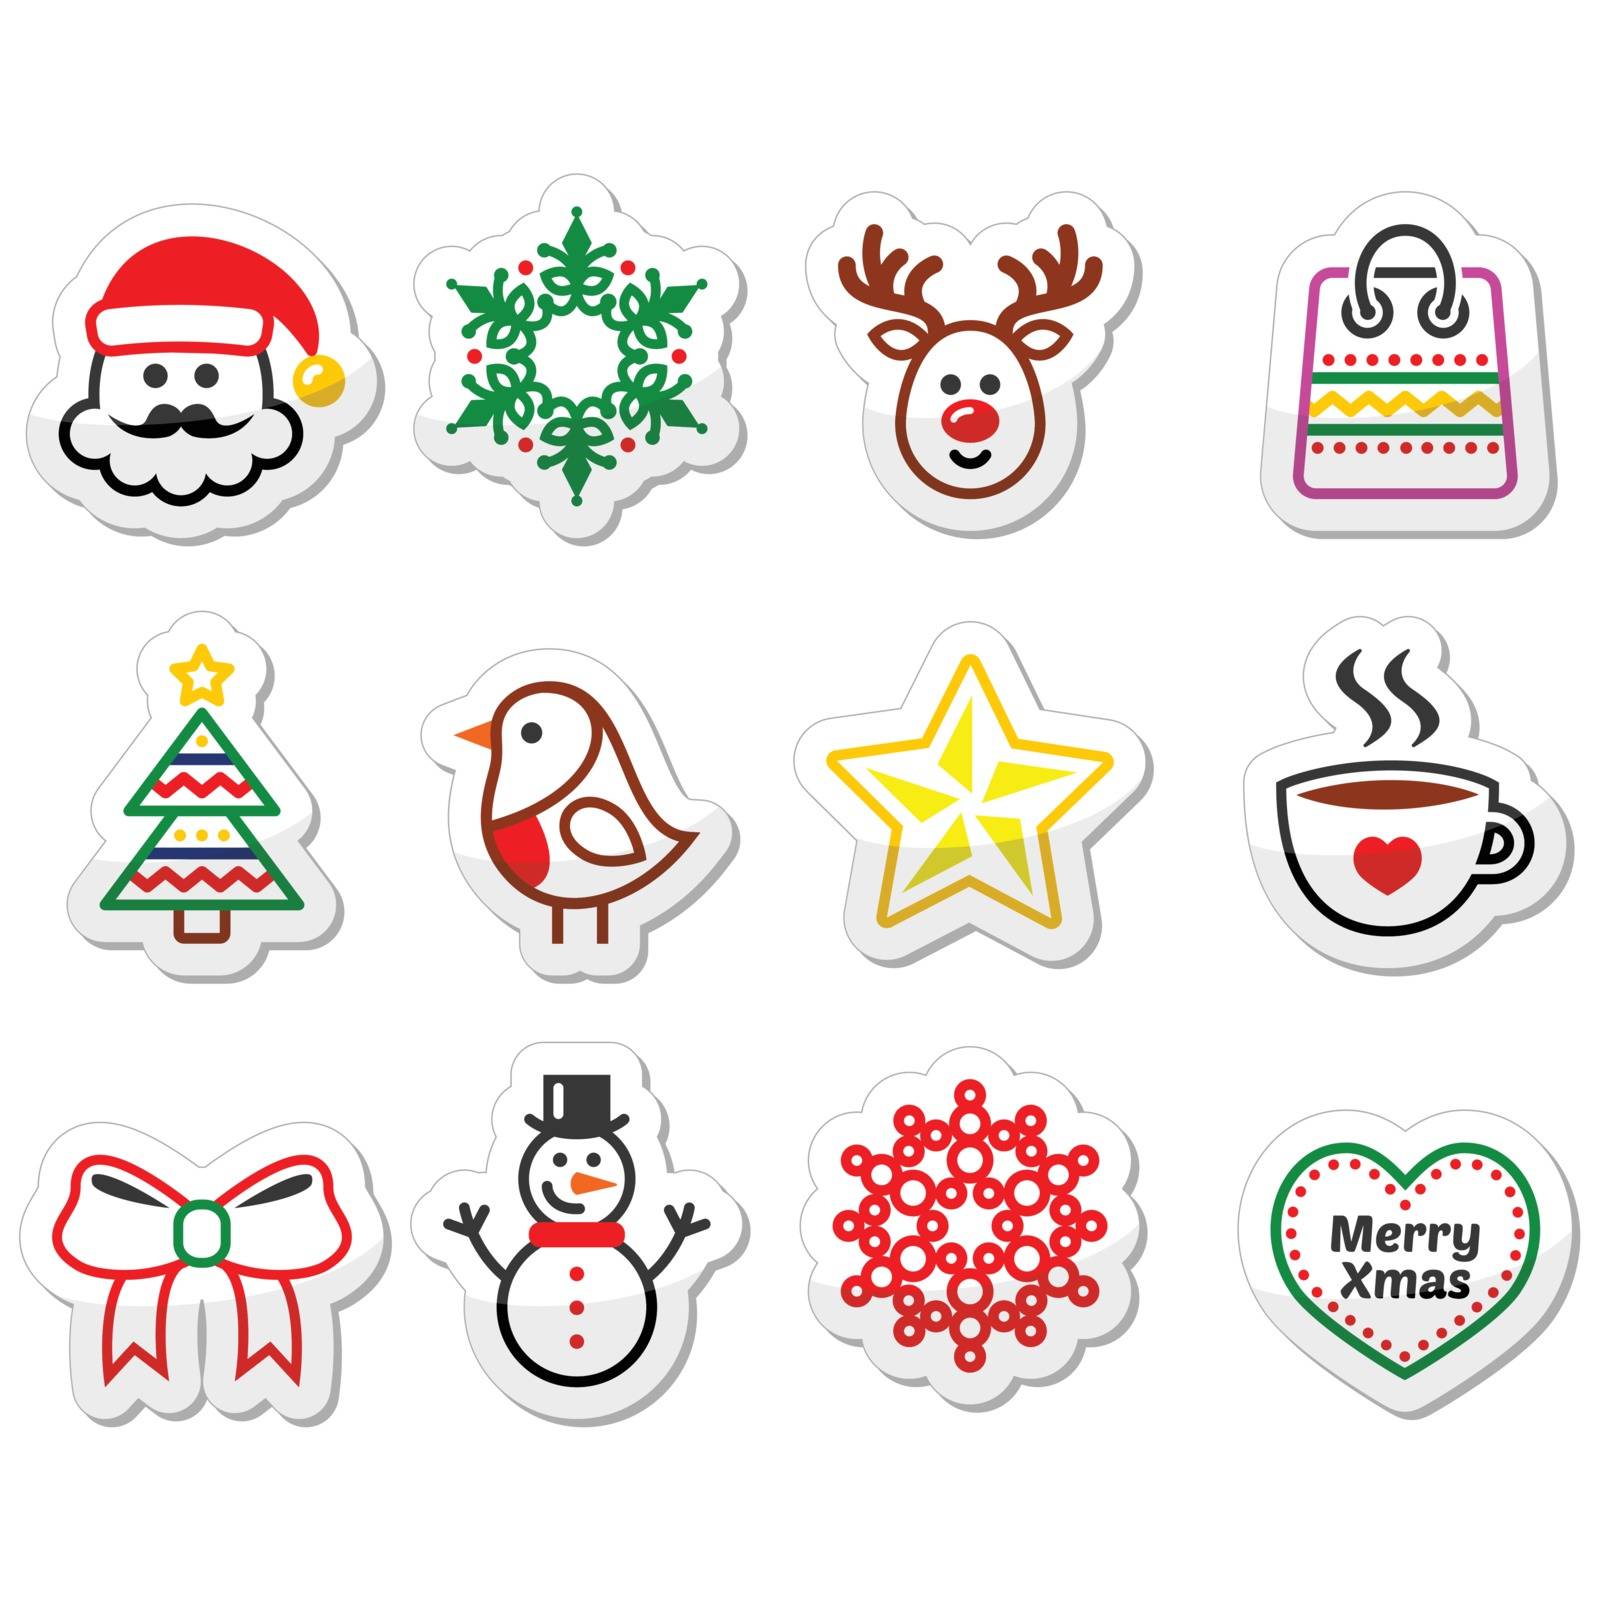 Christmas, winter icons set - Santa Claus, snowman by RedKoala